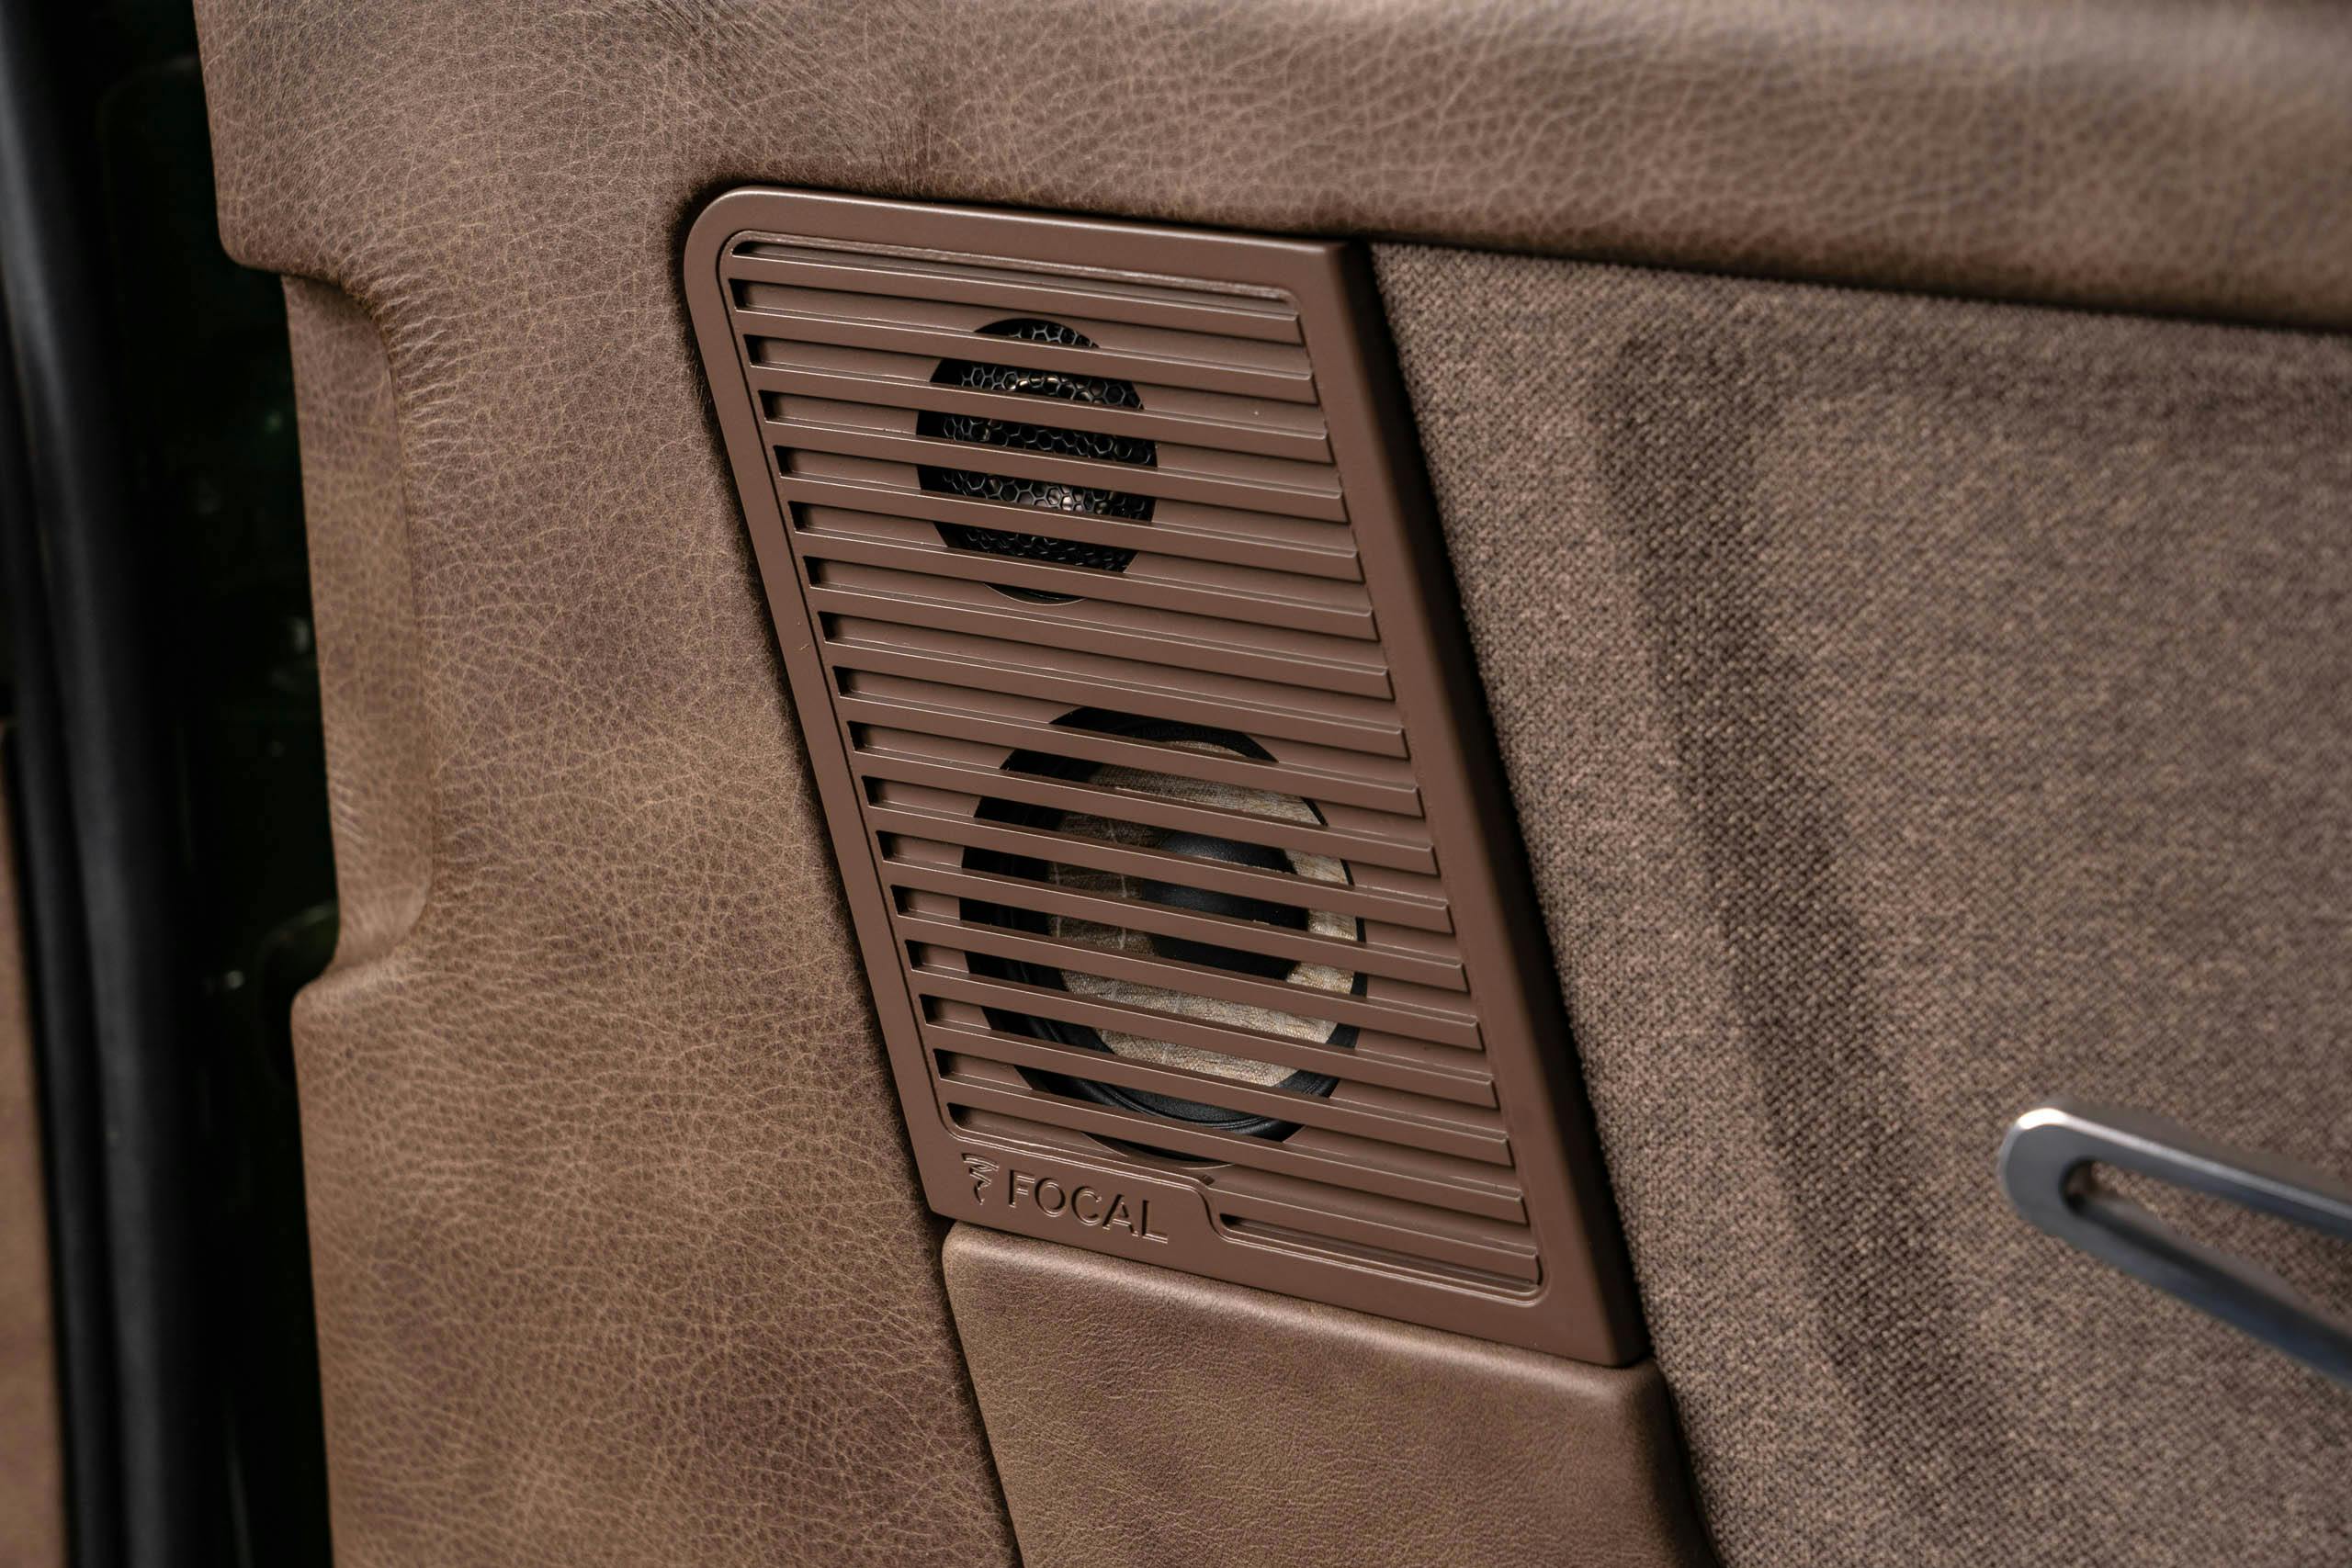 Velocity Modern Classics K5 Chevy Blazer restomod interior speaker grille detail